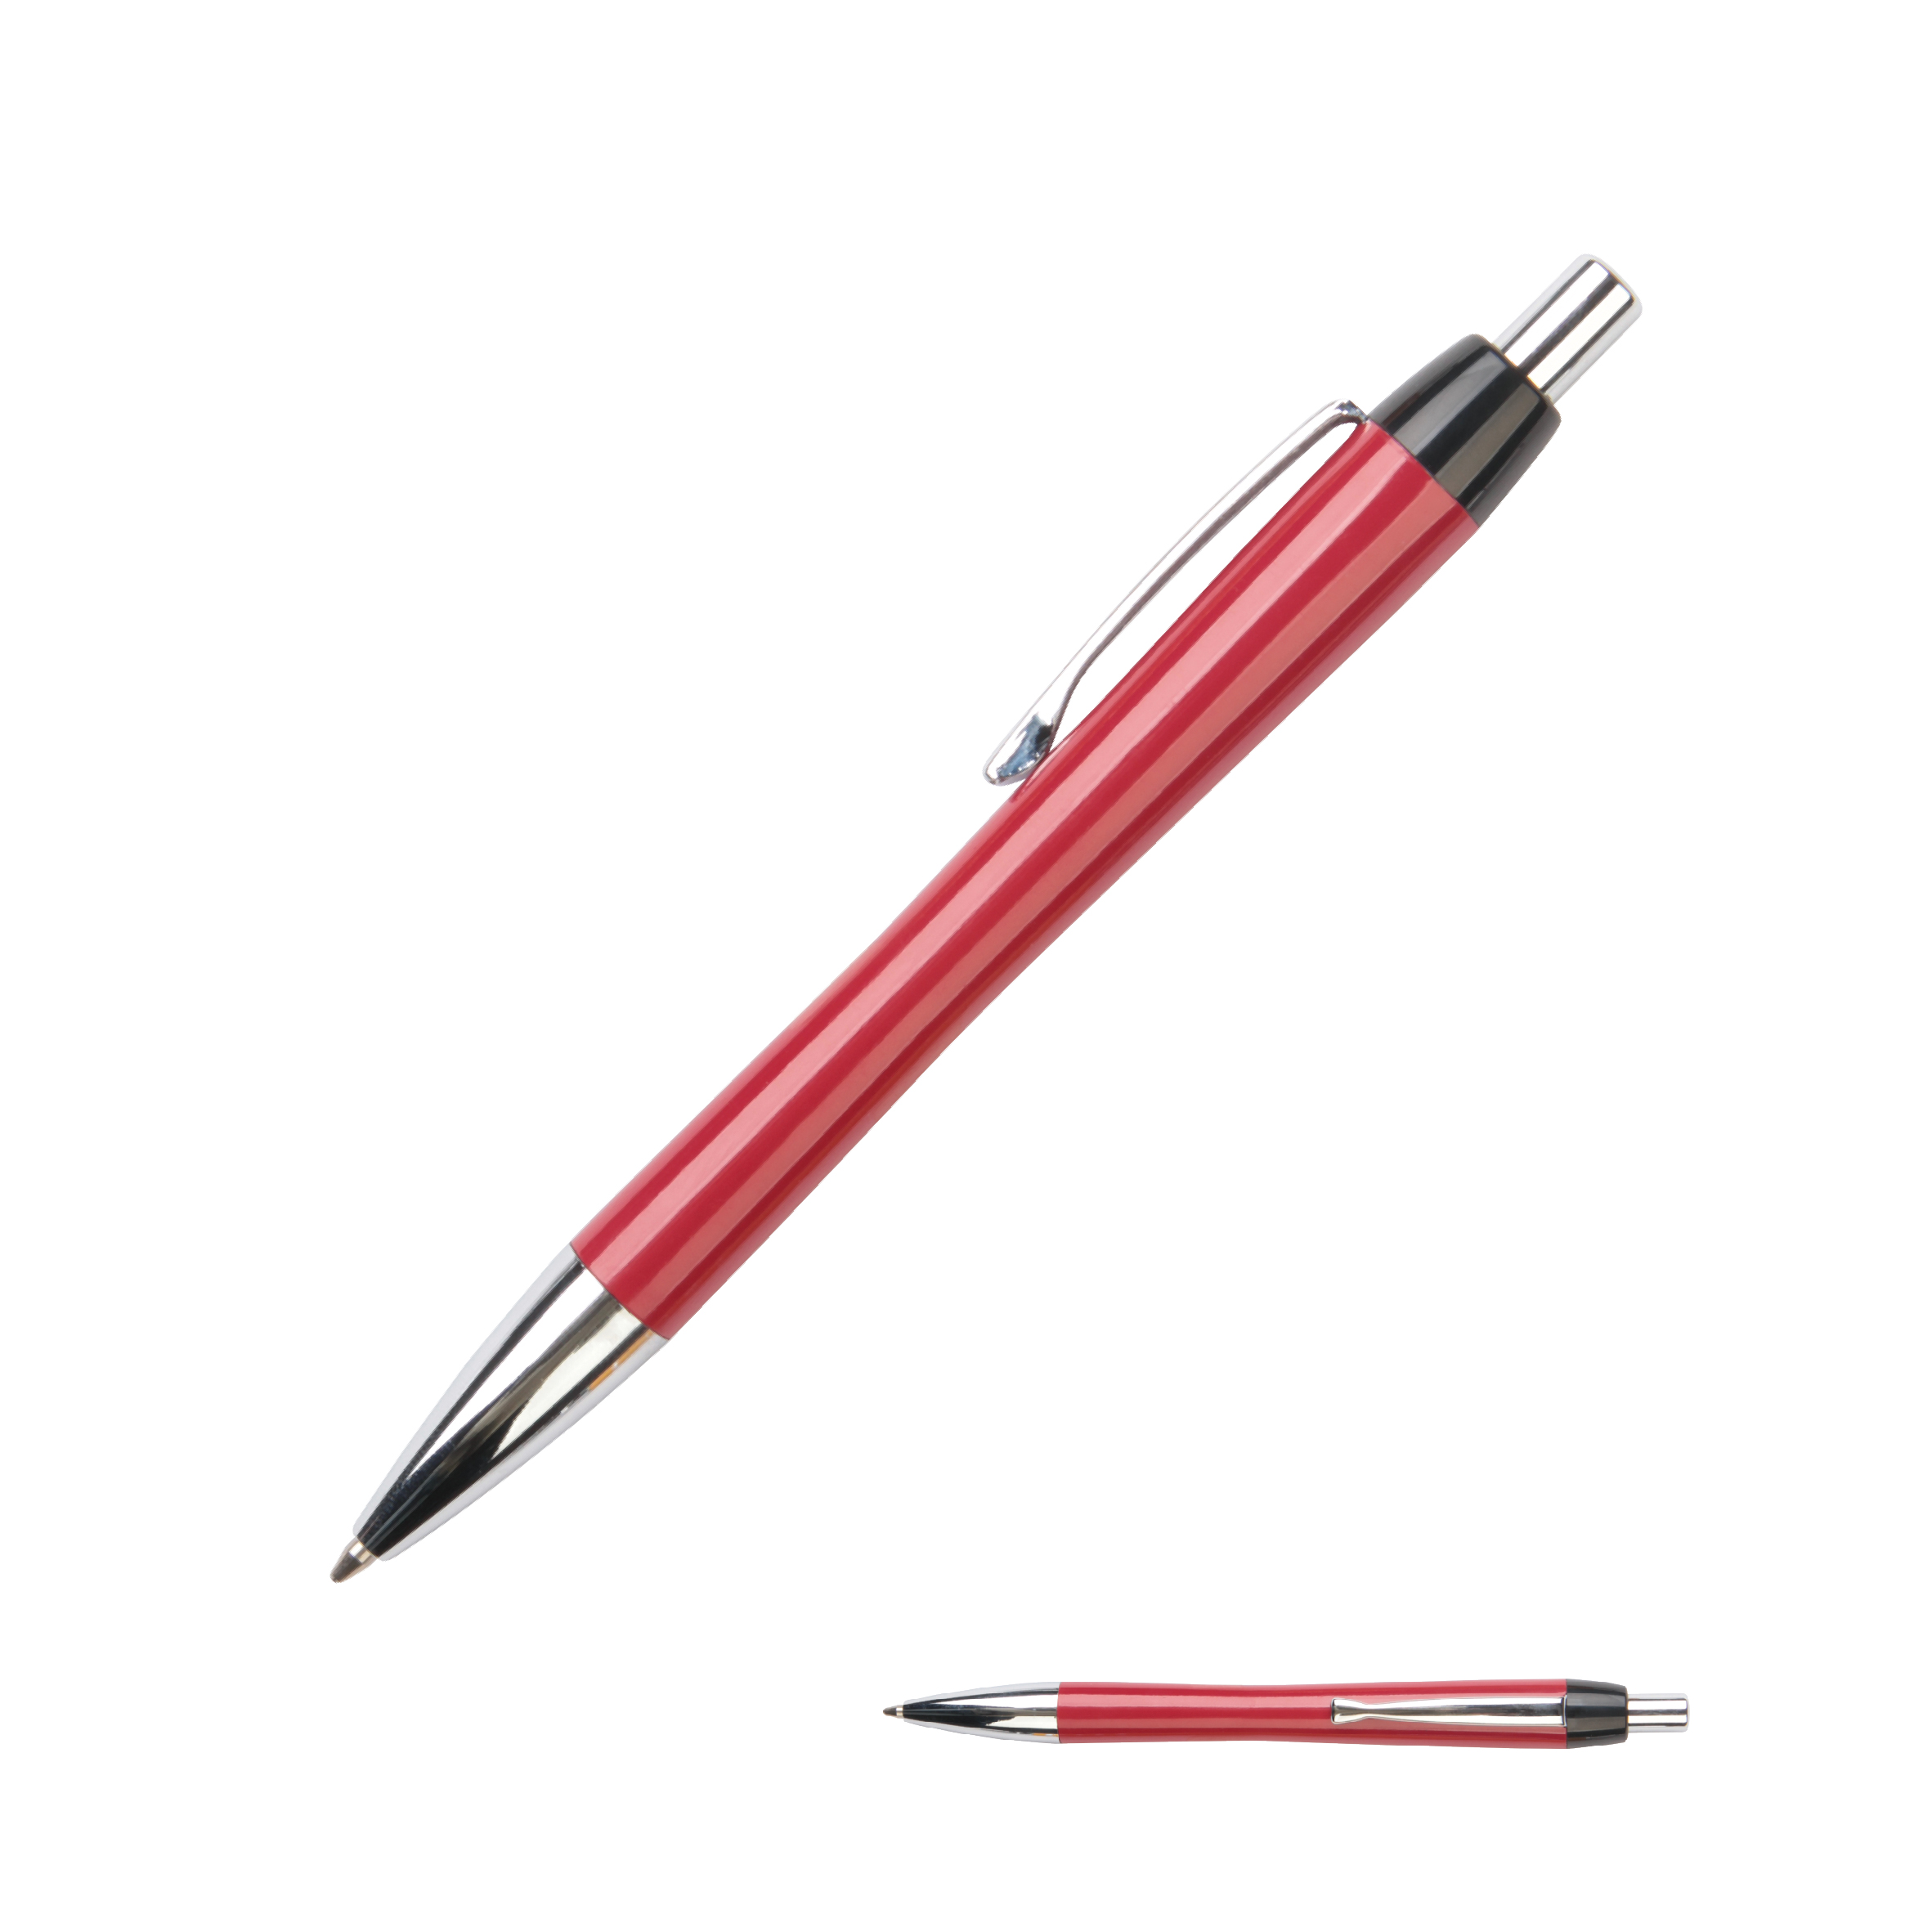 0.7mm/1.0mm Red Barrel Press Ball Metal Pen Black/Blue/Red Ink